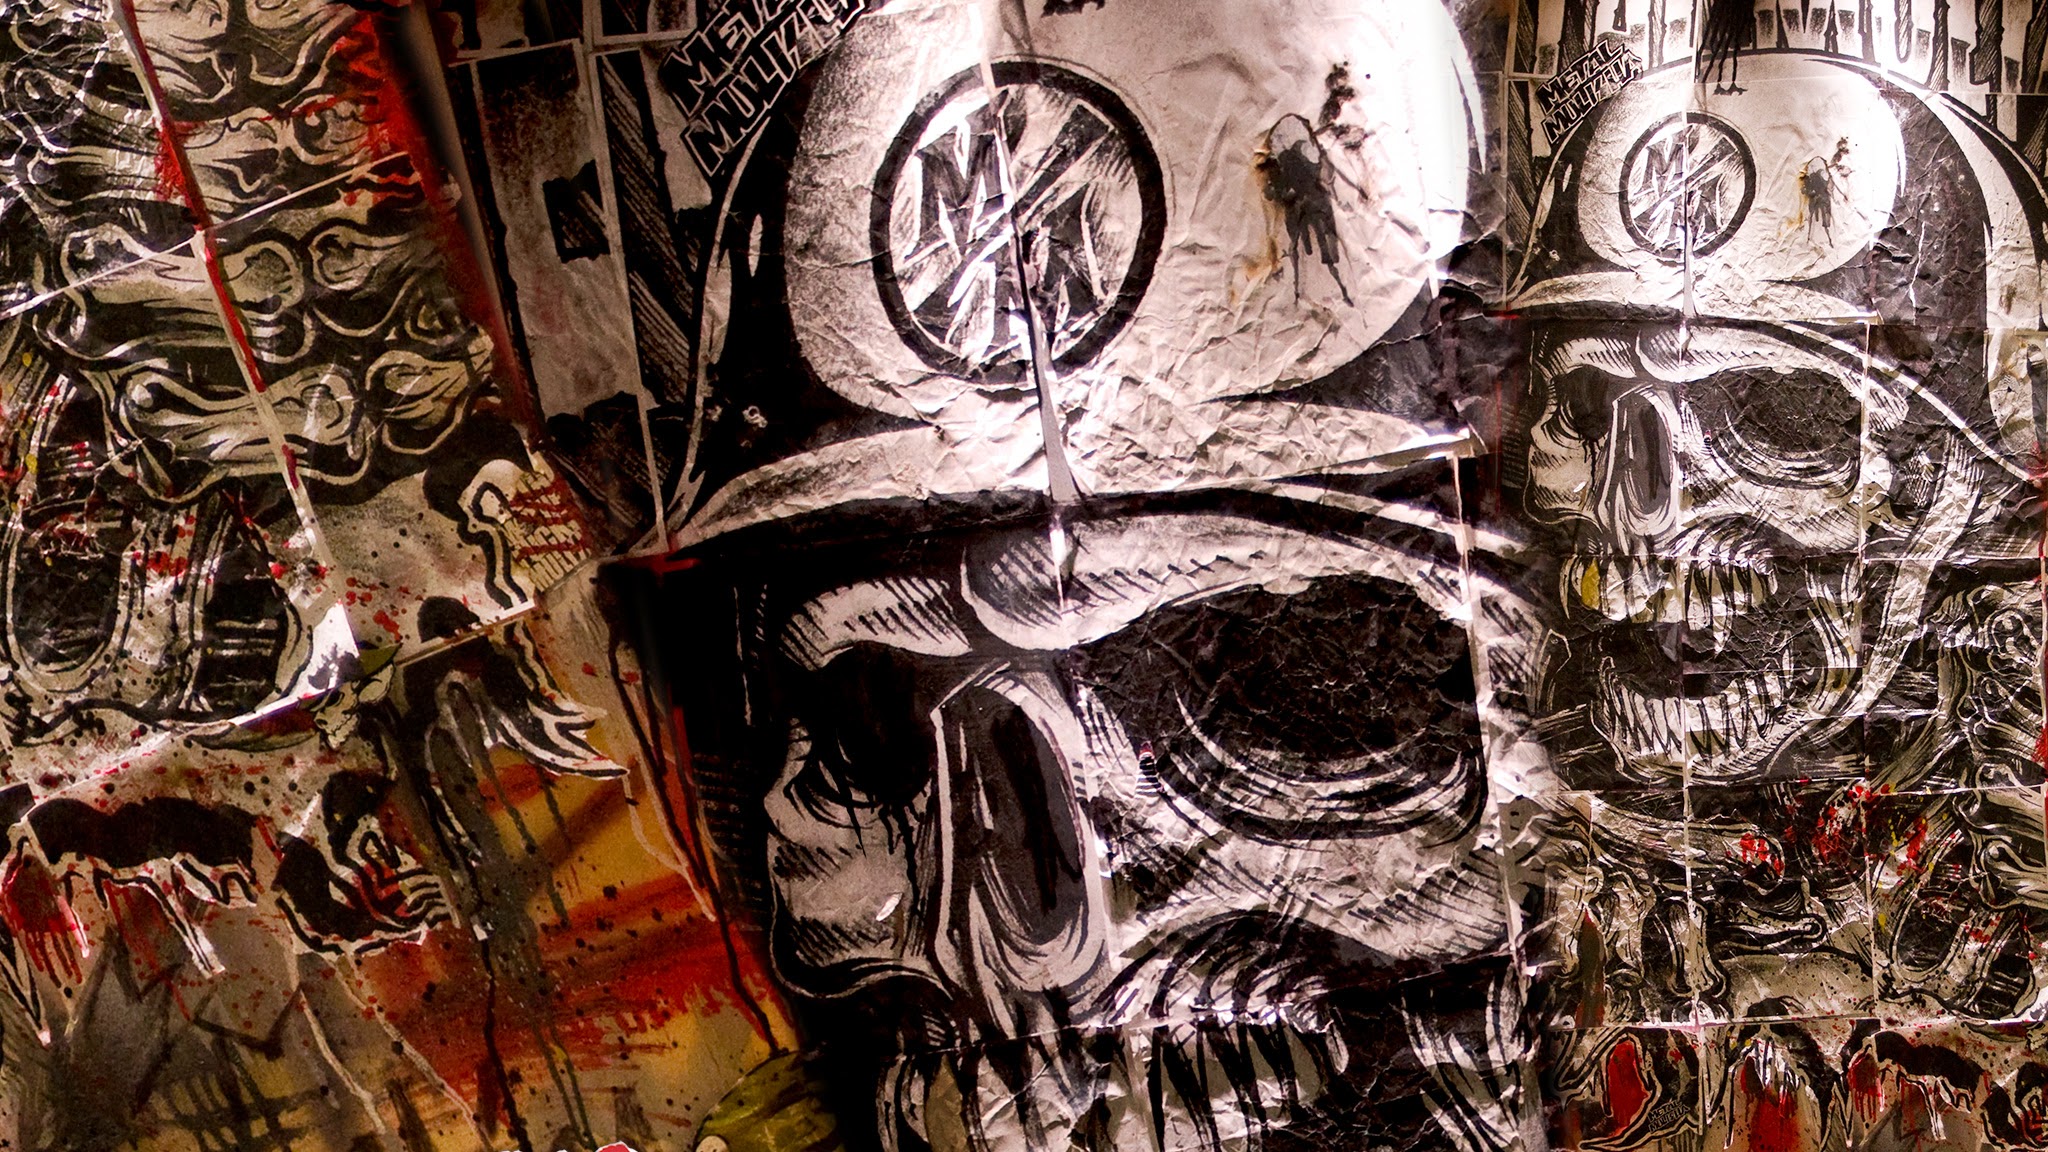 Metal mulisha logo wallpaper